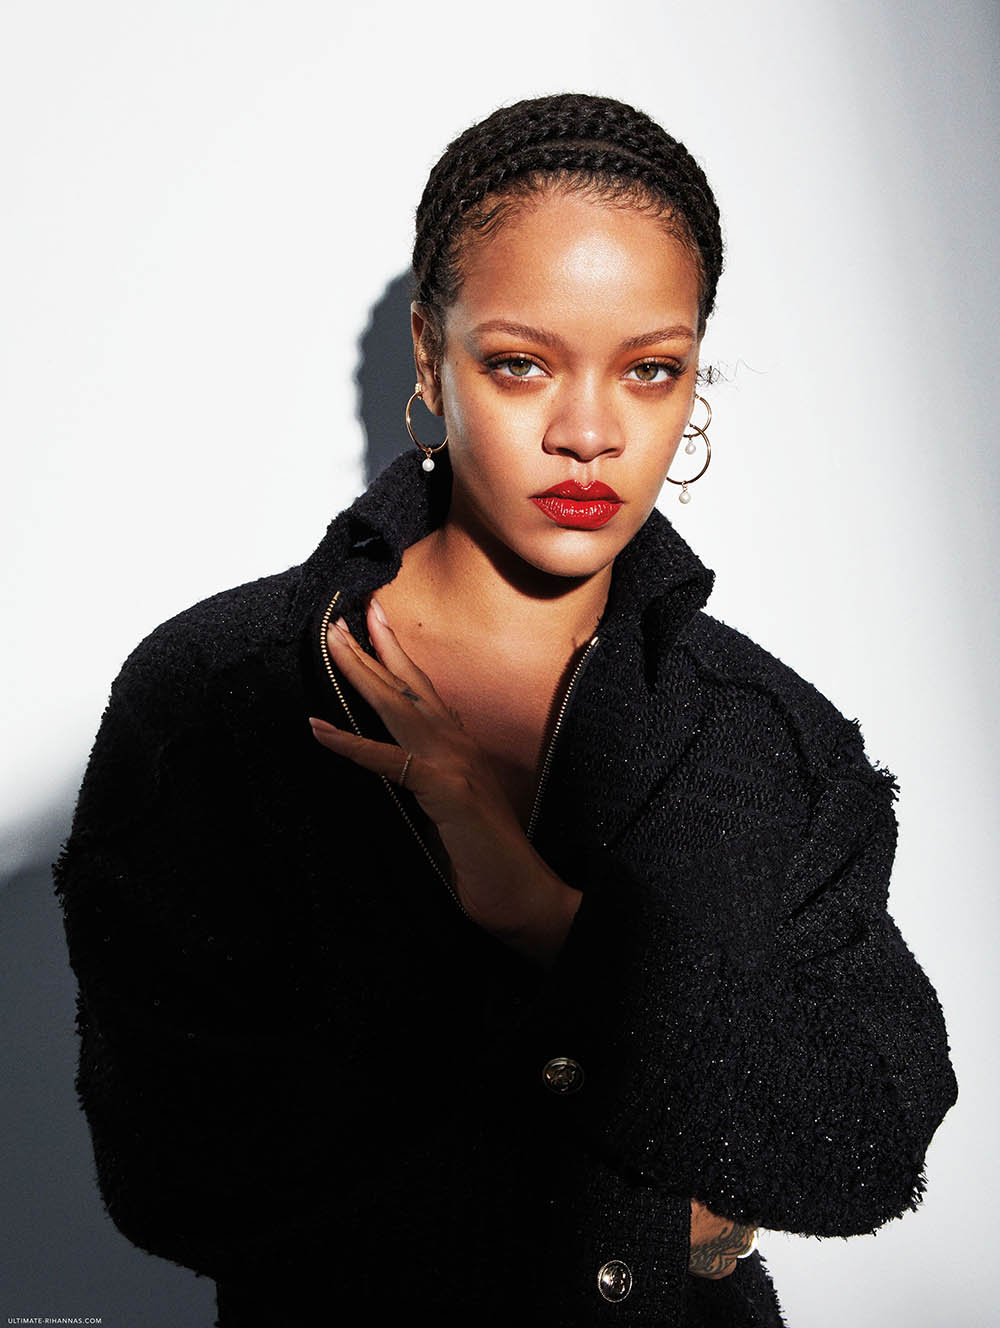 Rihanna covers Harper’s Bazaar US & UK September 2020 by Gray Sorrenti